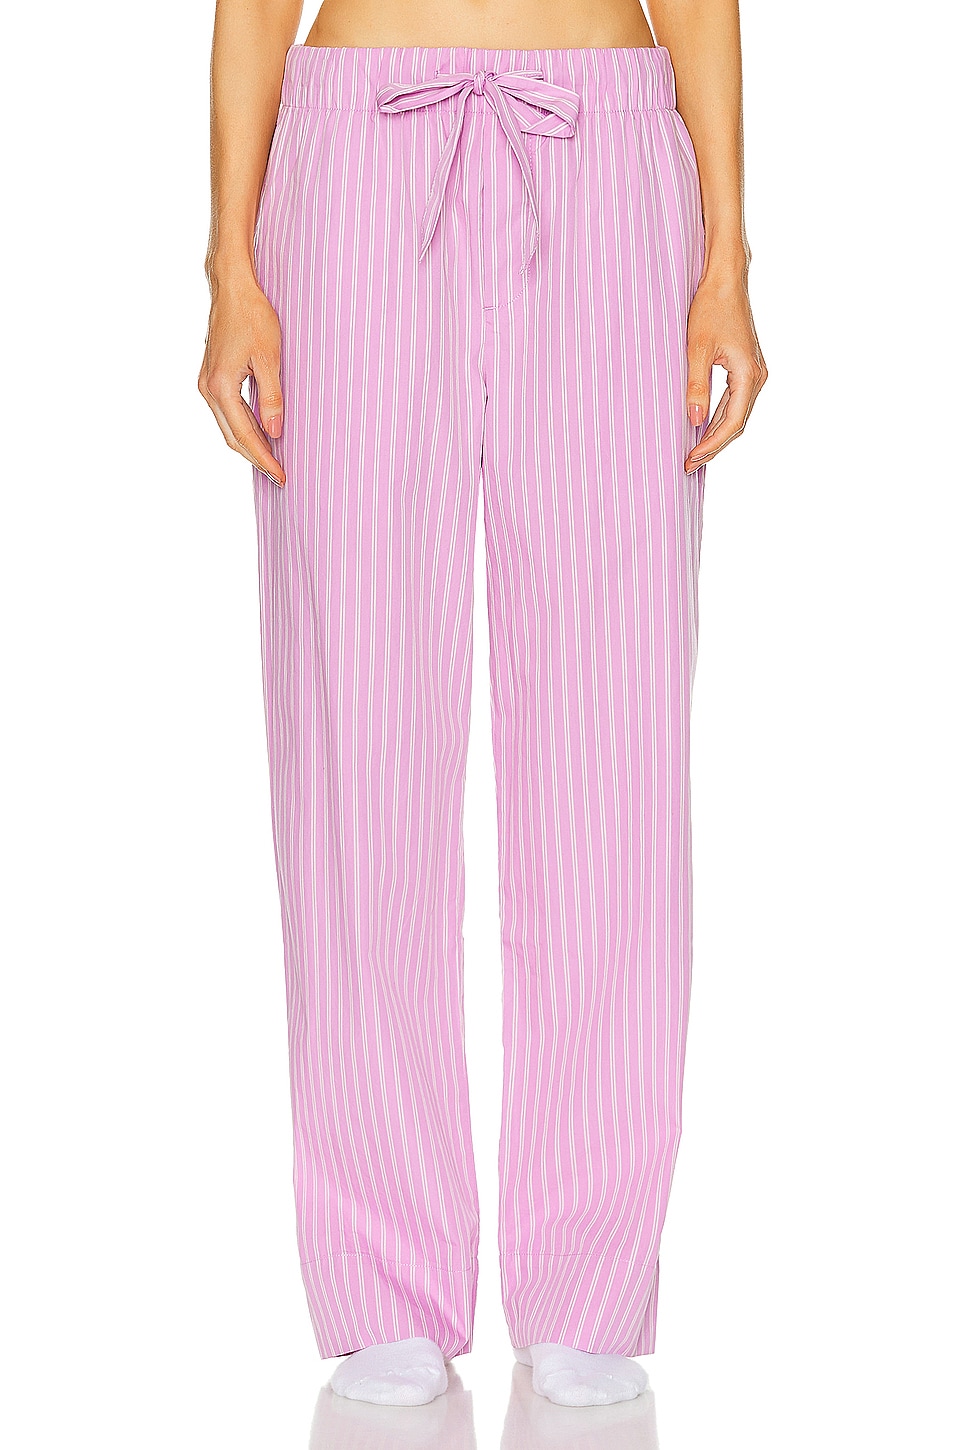 Image 1 of Tekla Stripe Pant in Purple Pink Stripes